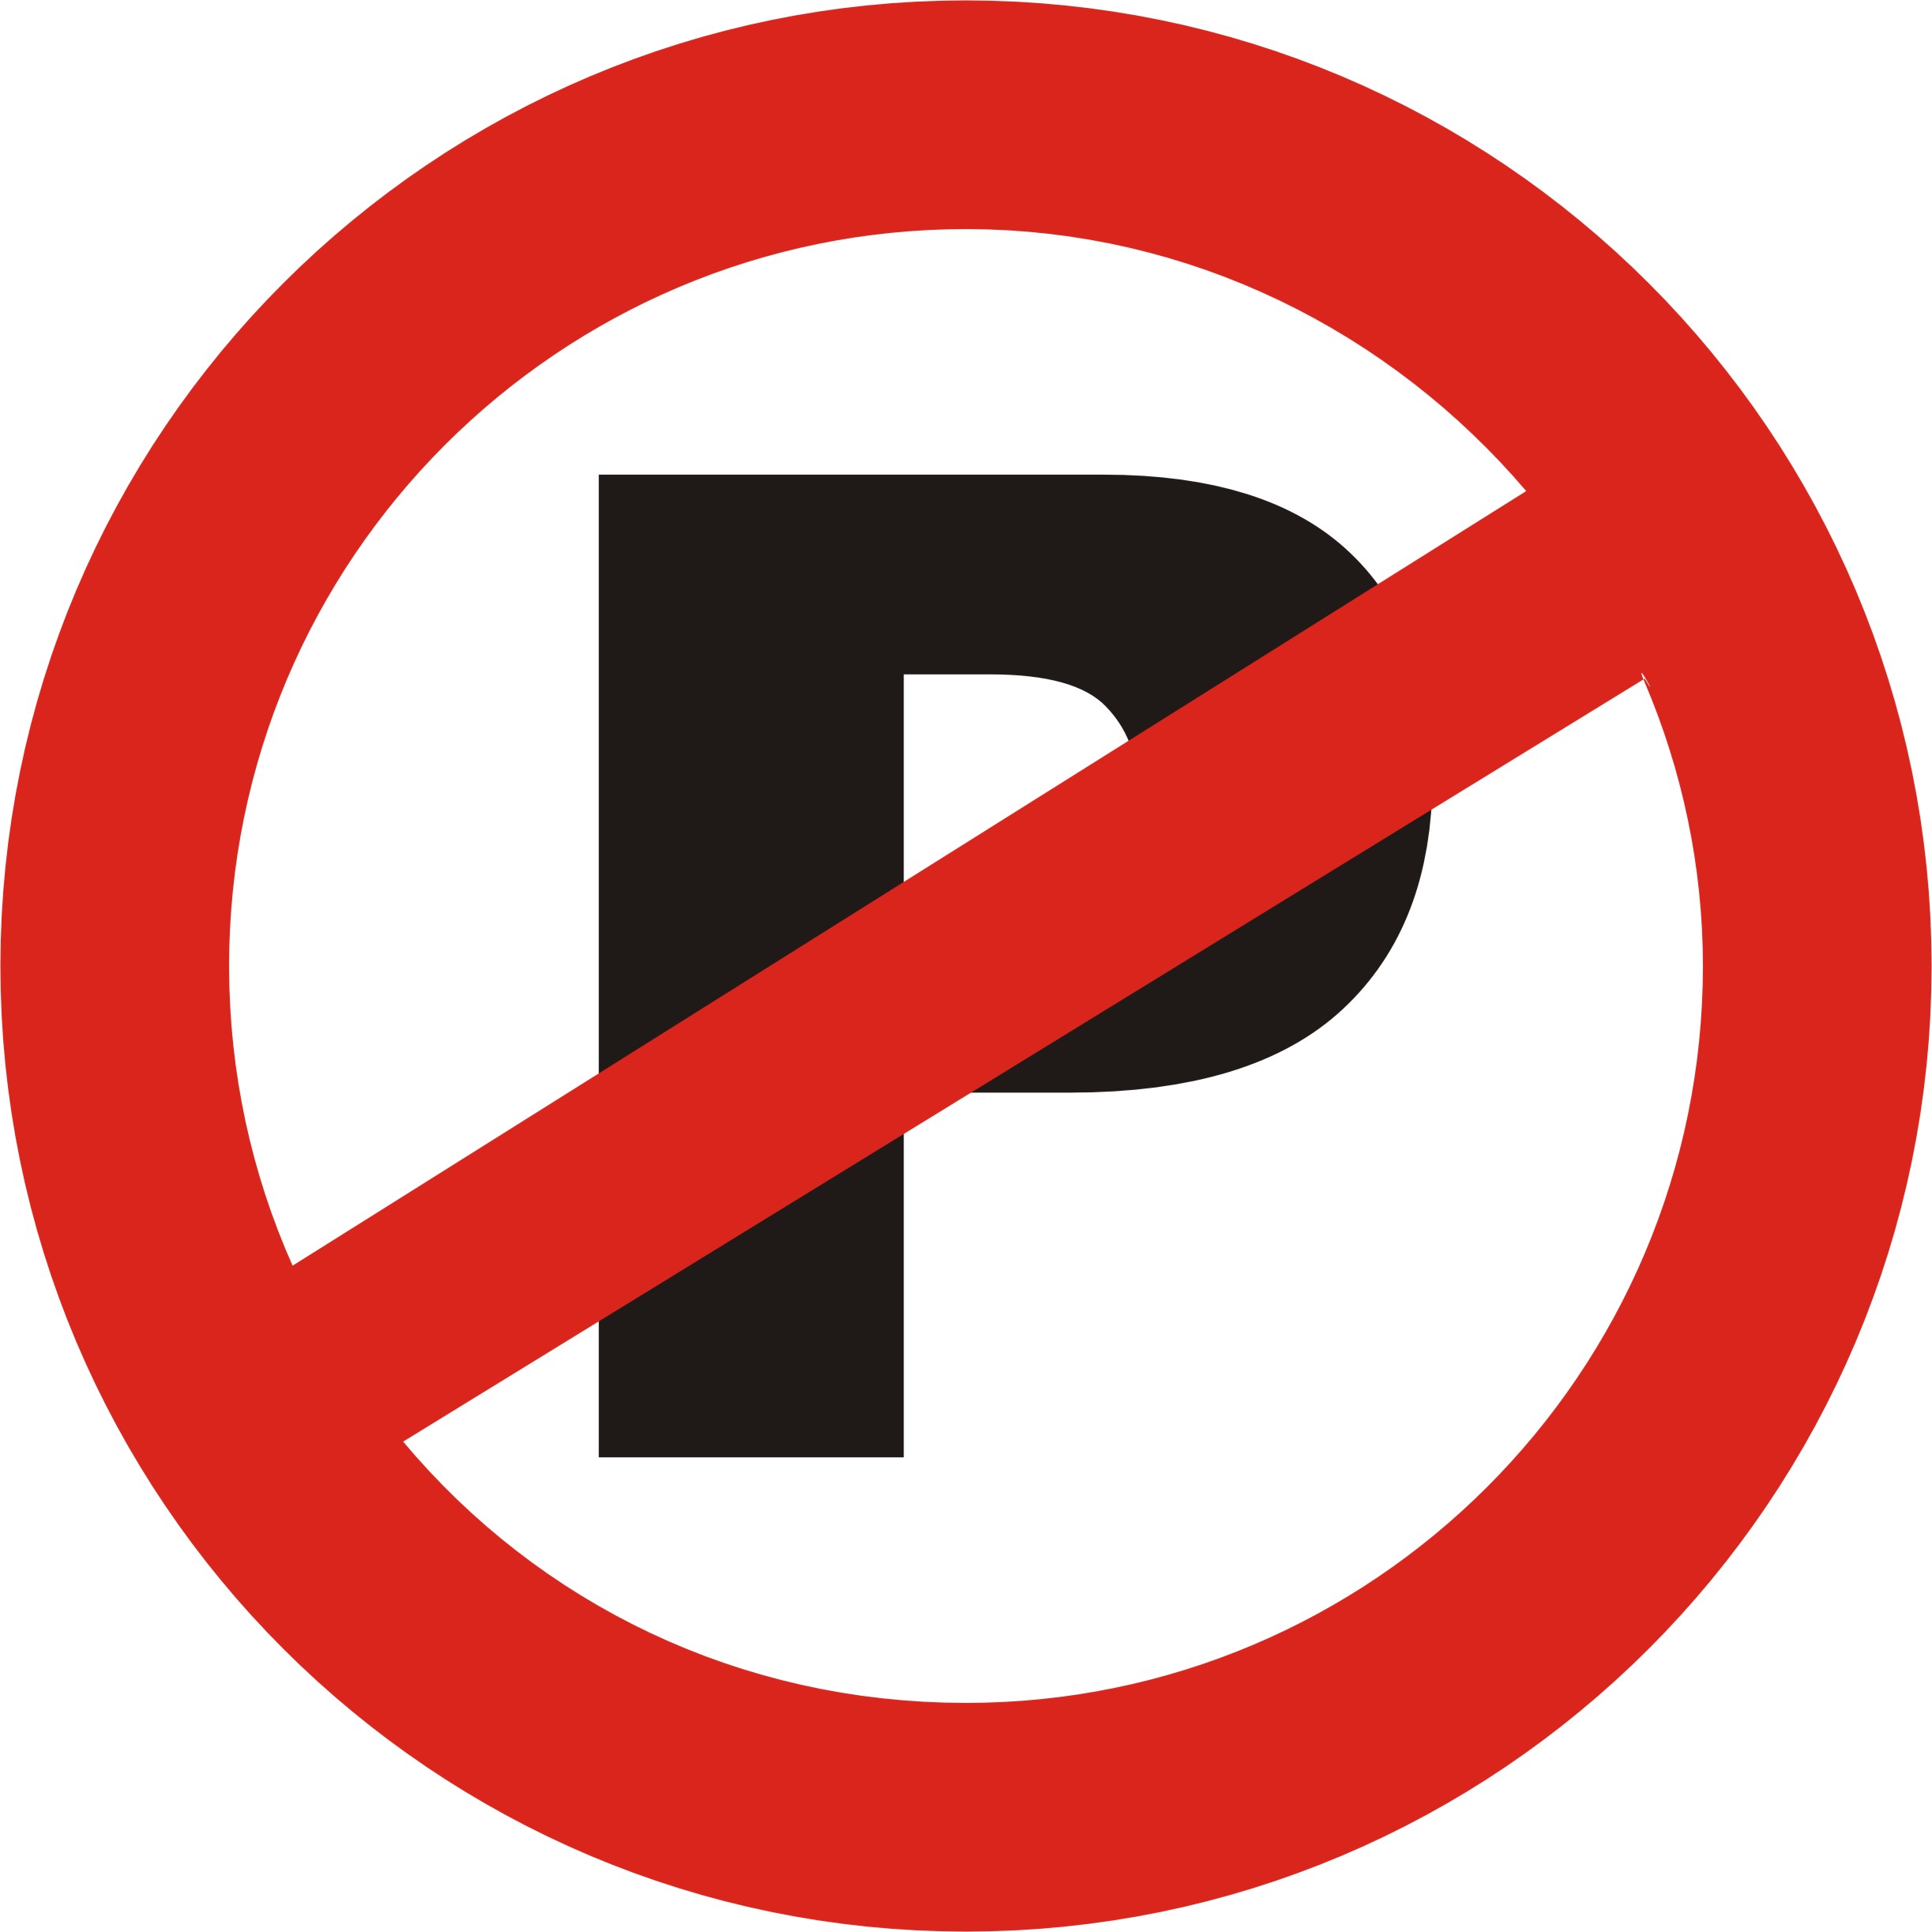 Road Sign No Parking.jpg